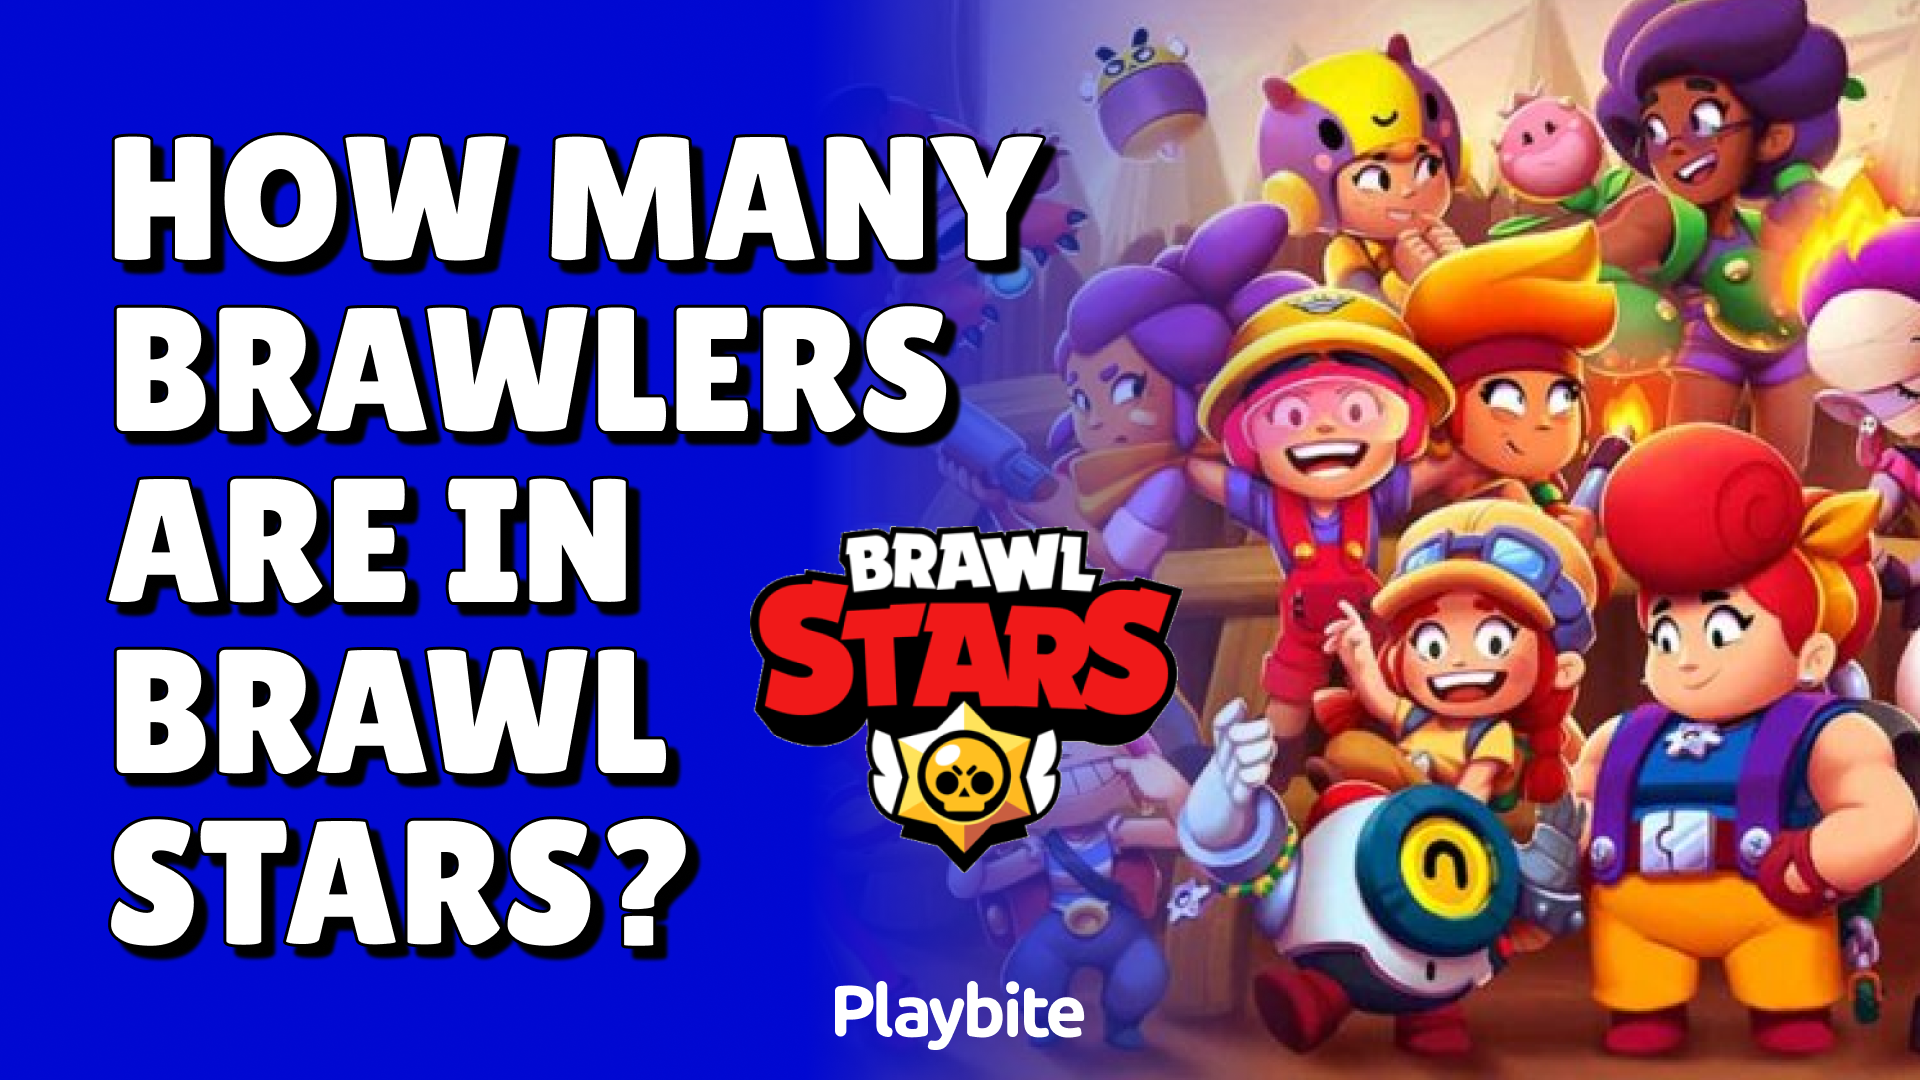 How Many Brawlers Are In Brawl Stars?